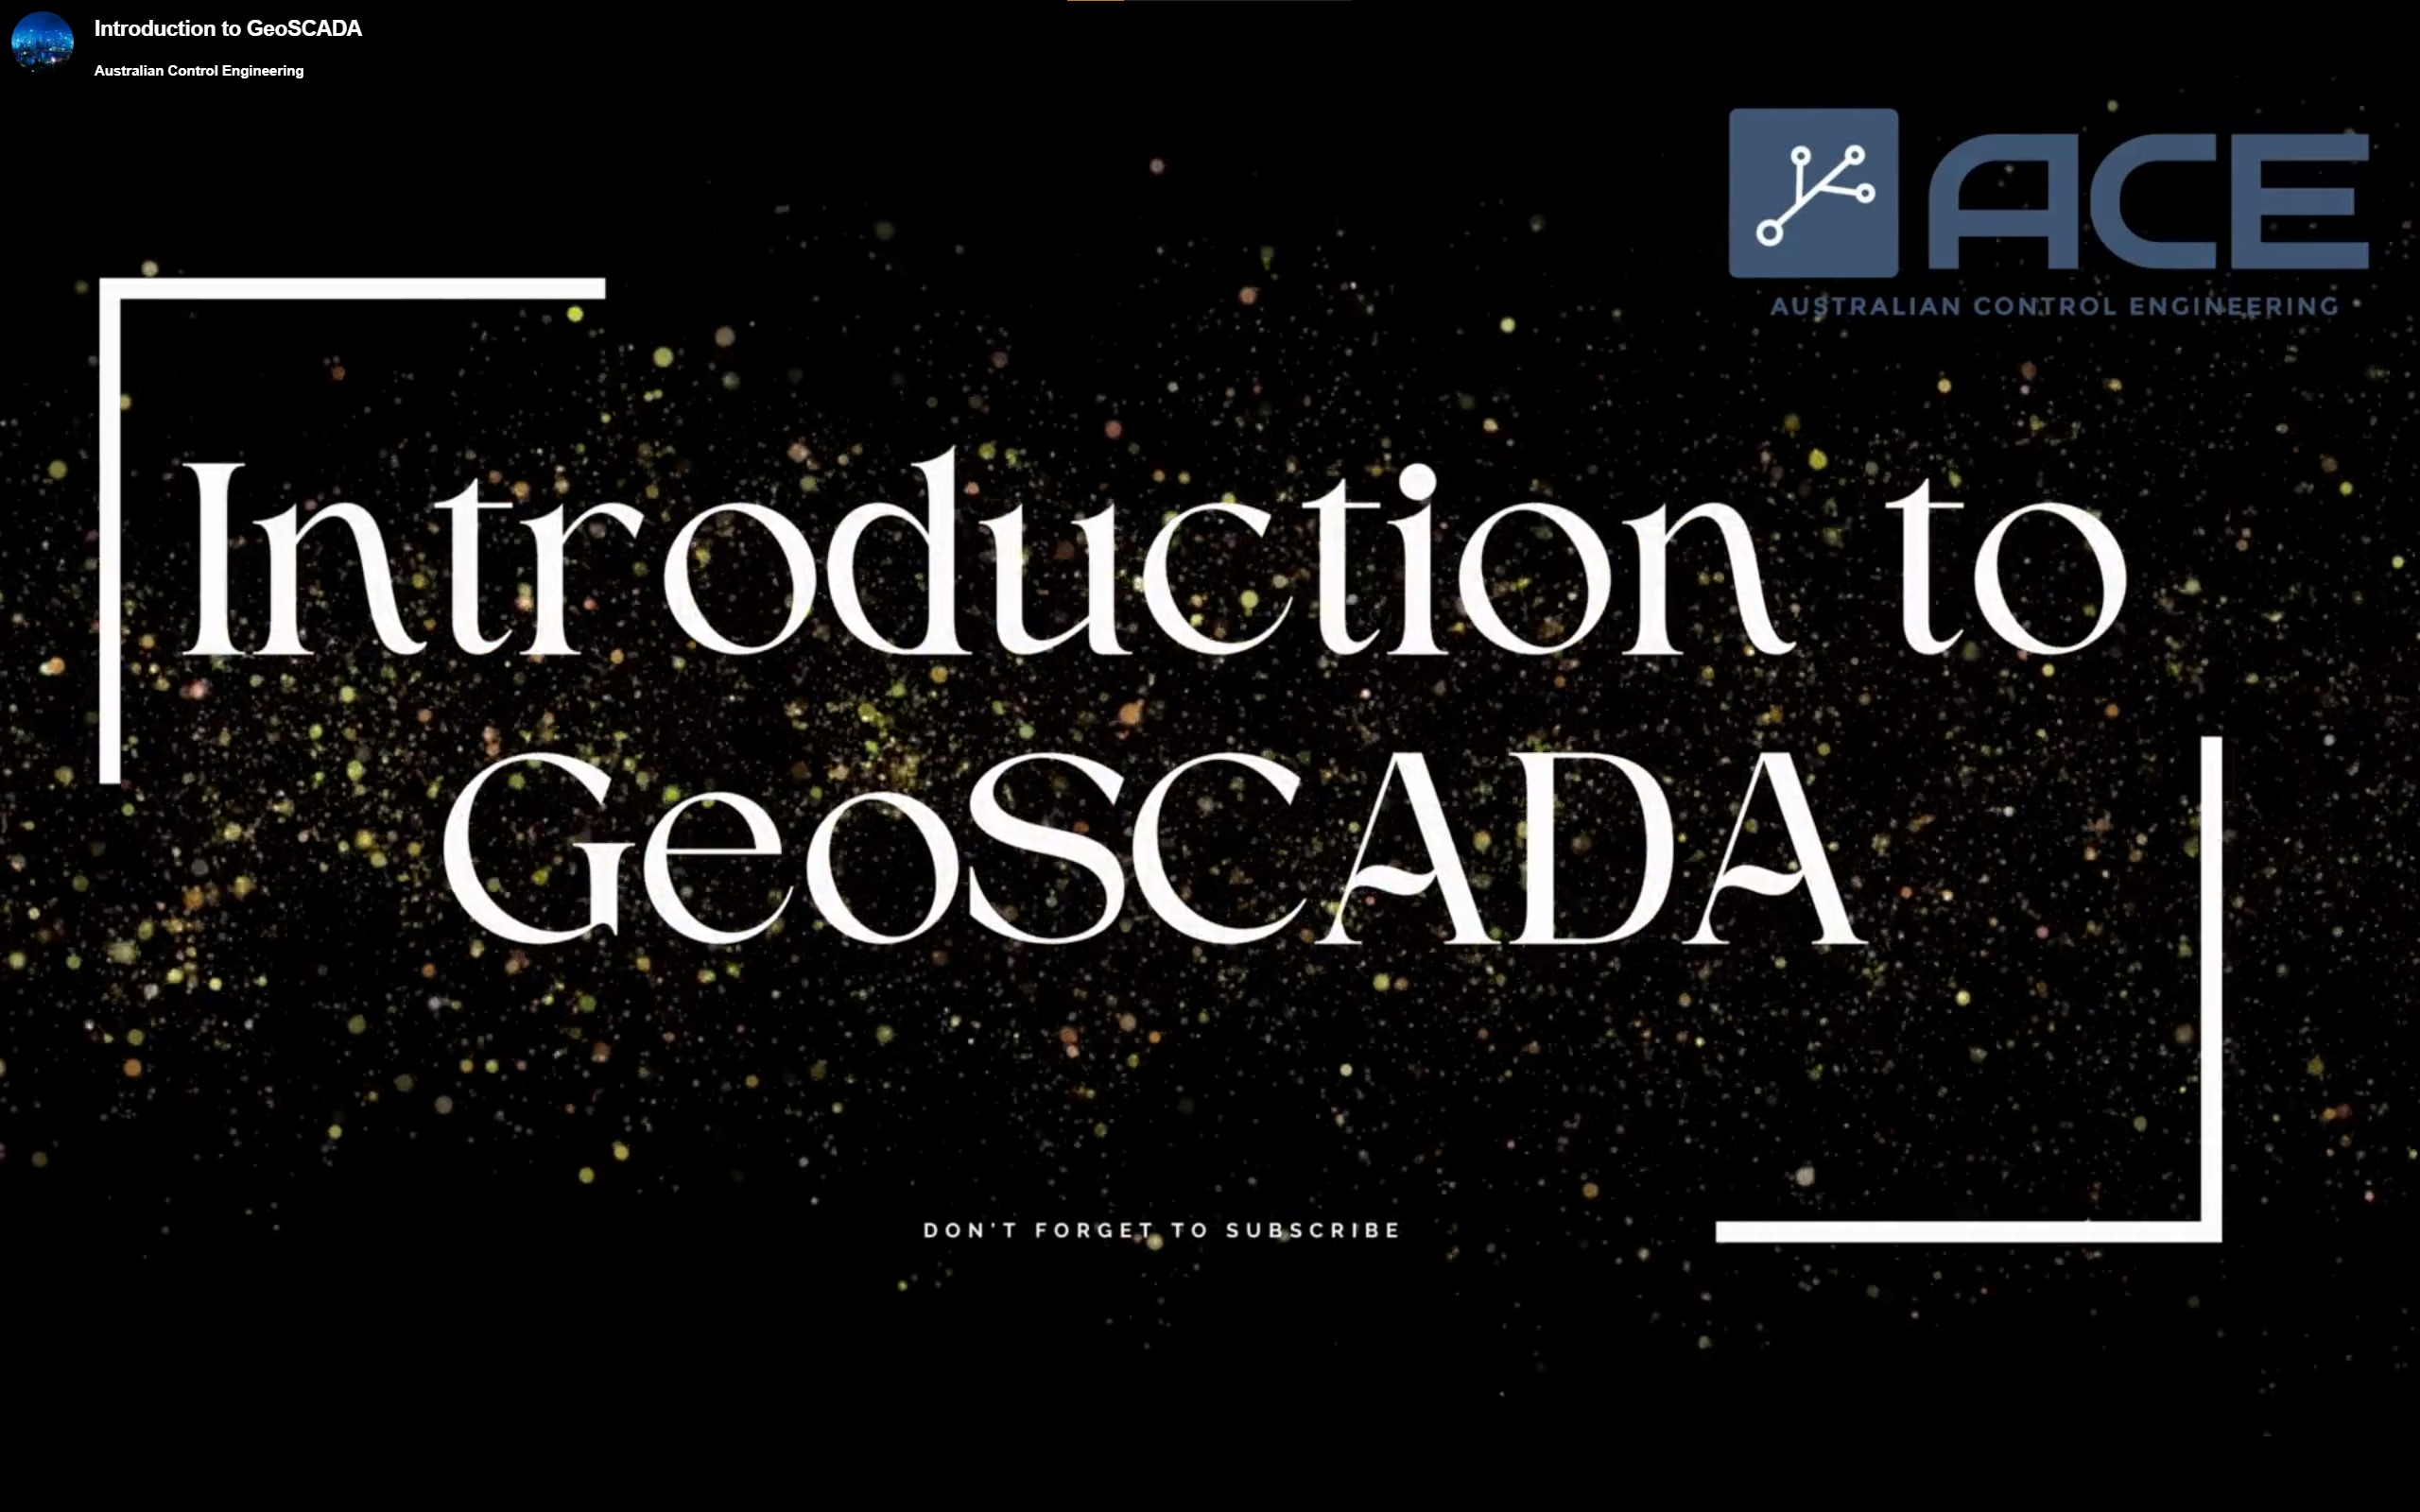 ACE Engineer explains about GeoSCADA